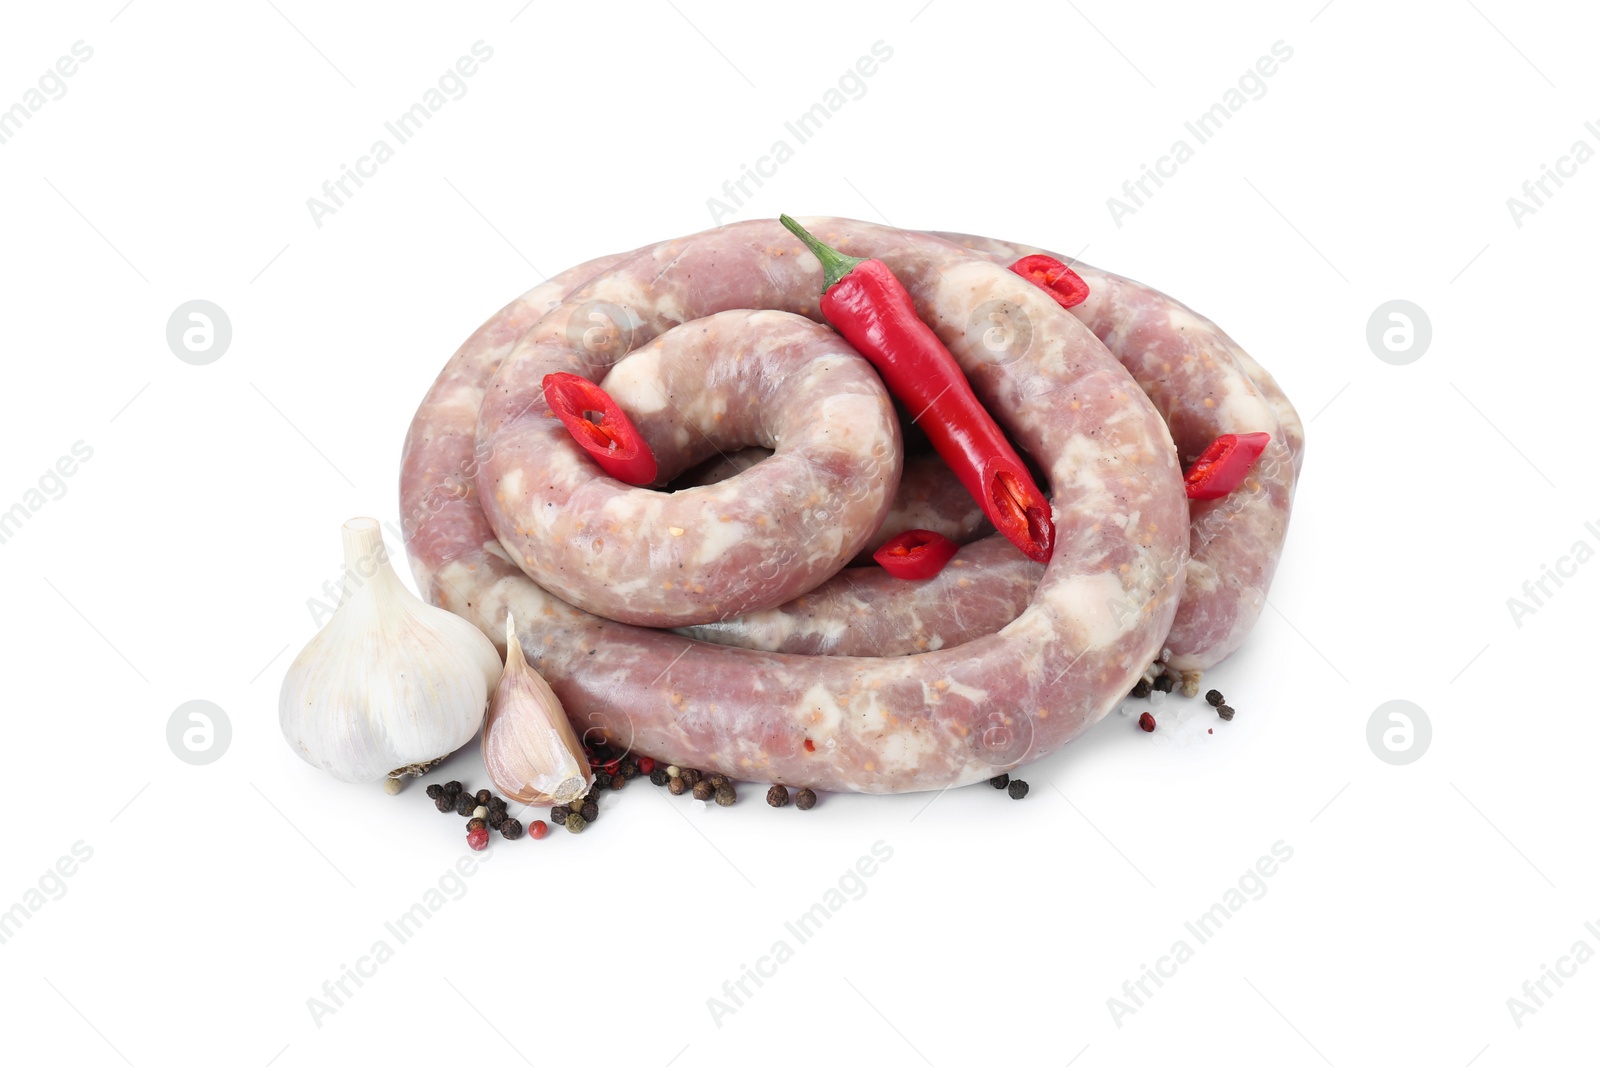 Photo of Homemade sausage, garlic, chili and peppercorns isolated on white